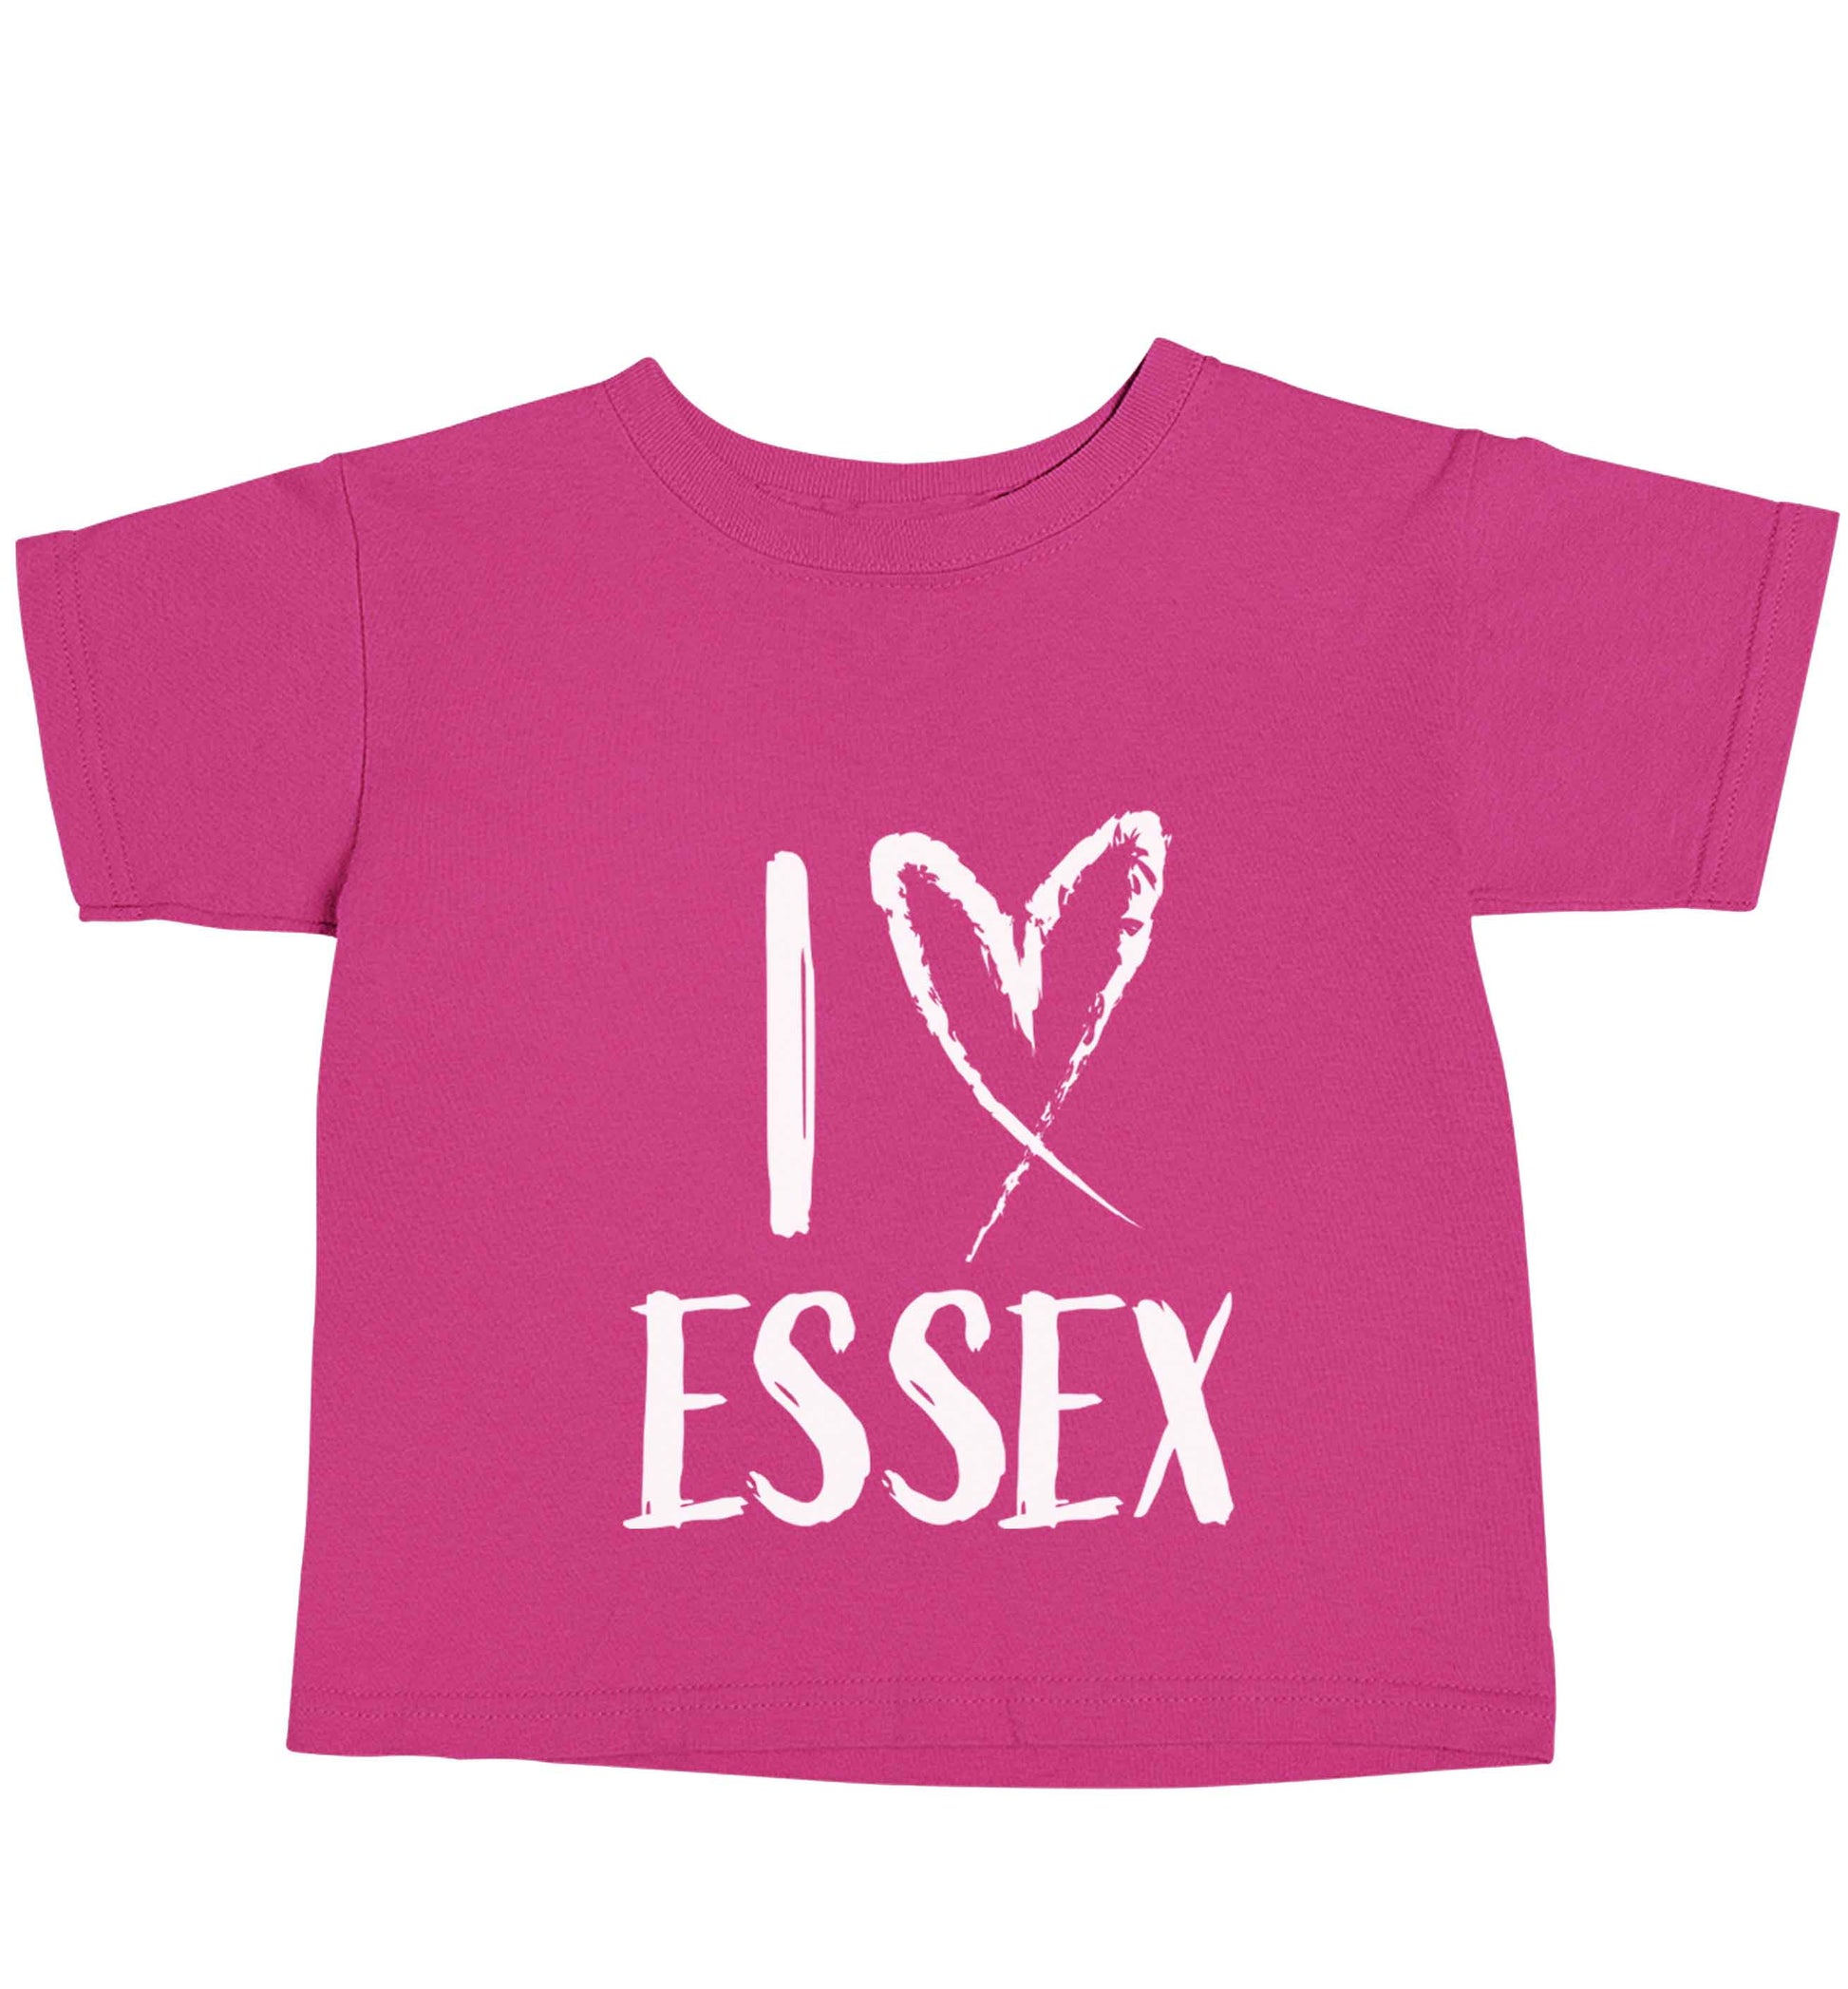 I love Essex pink baby toddler Tshirt 2 Years